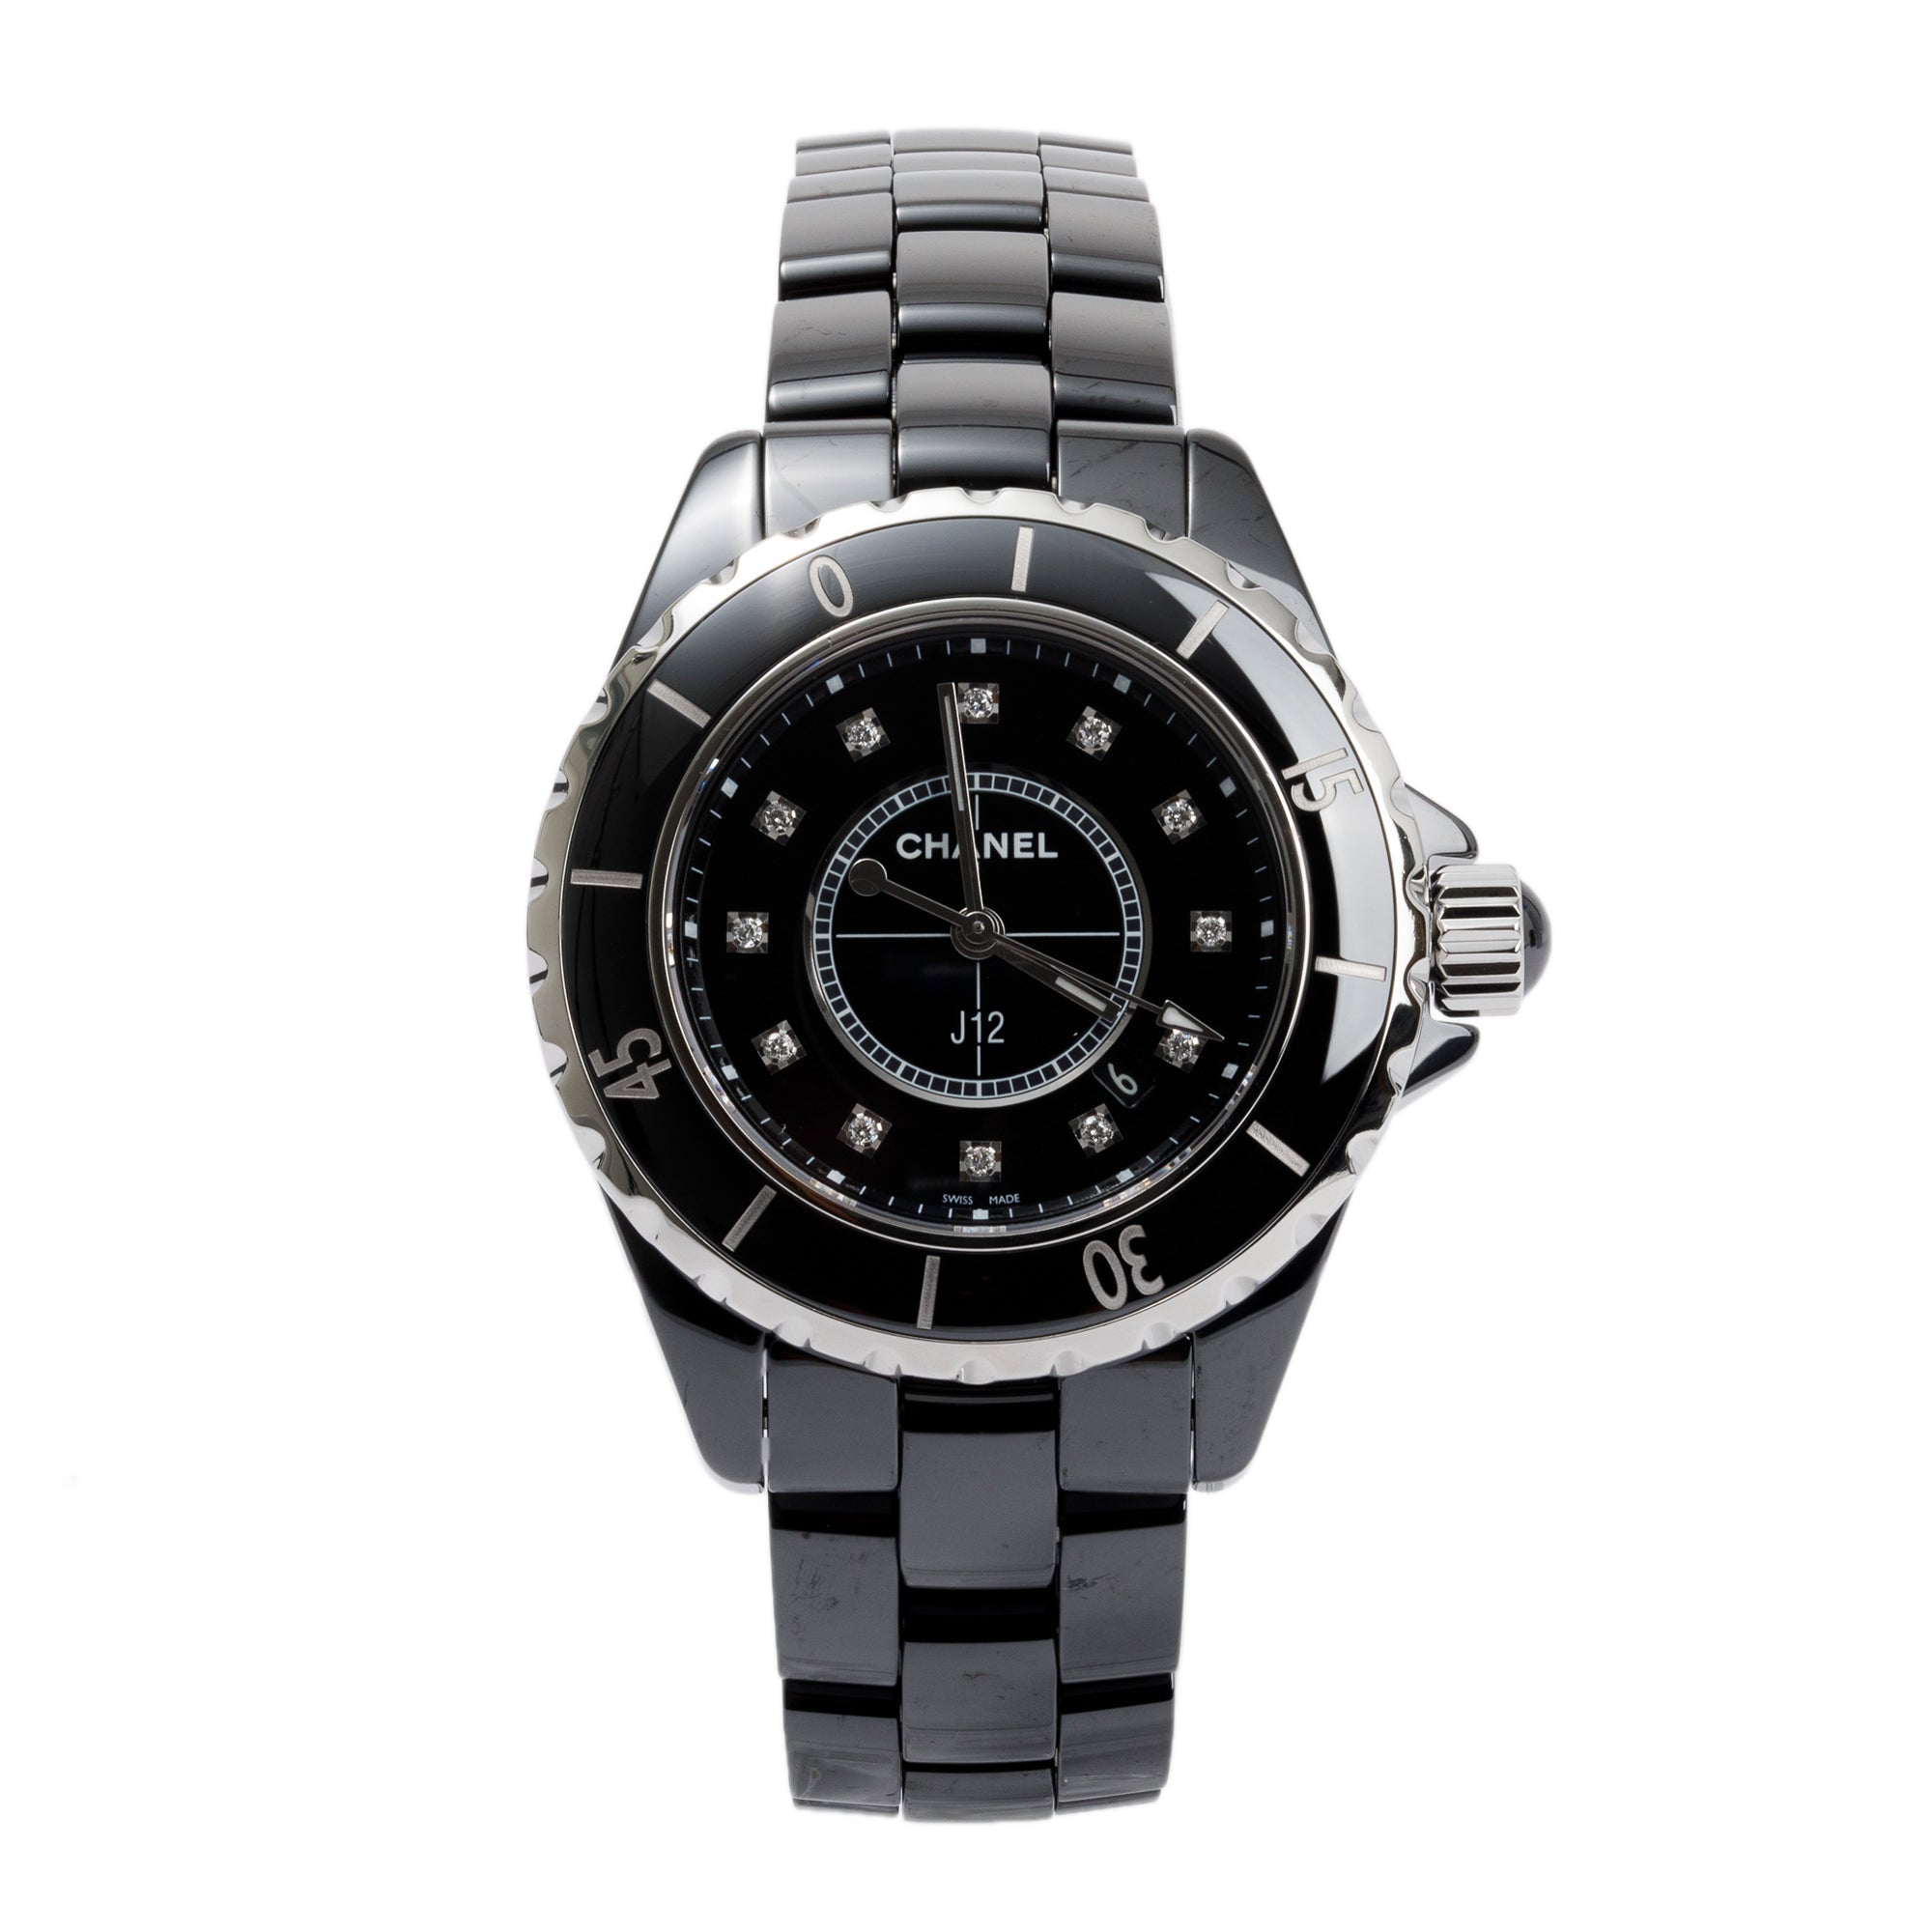 j12 automatic chanel watch